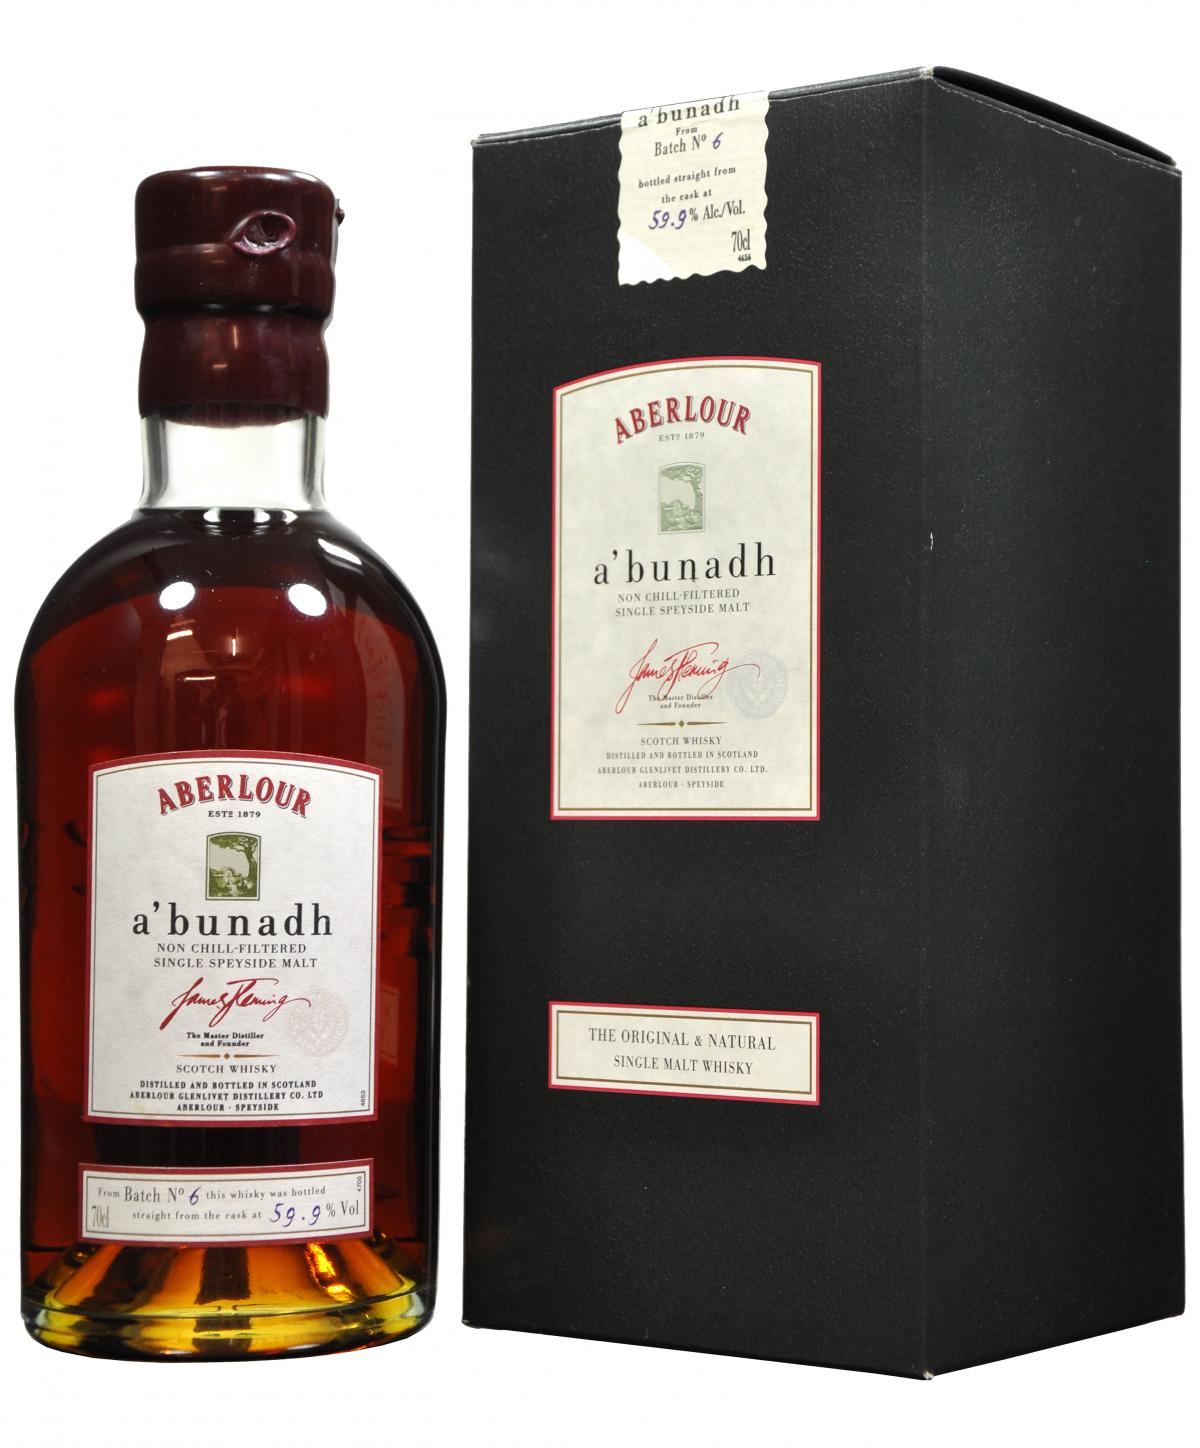 aberlour a'bunadh batch number 6, speyside single malt scotch whisky